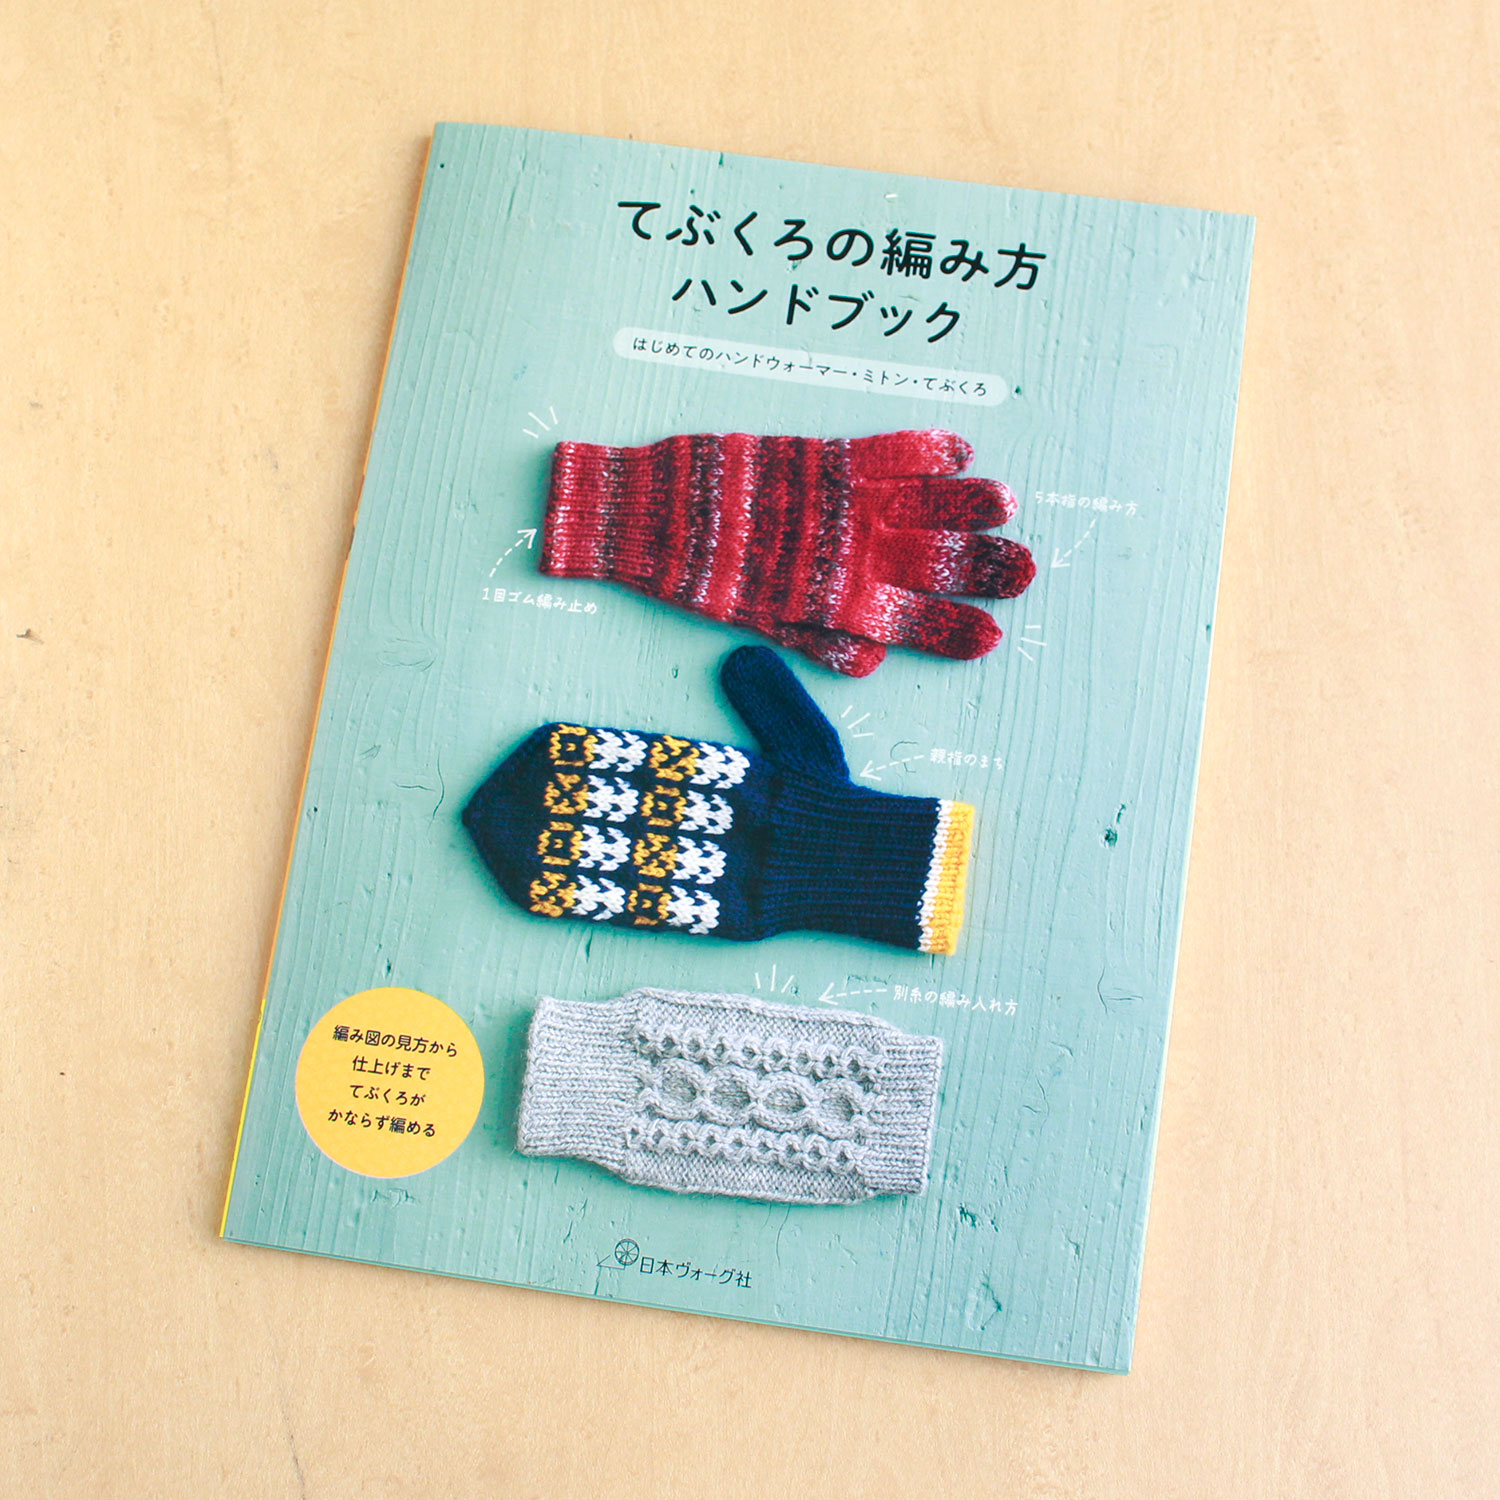 NV70745 てぶくろの編み方ハンドブック/日本ヴォーグ社(冊)